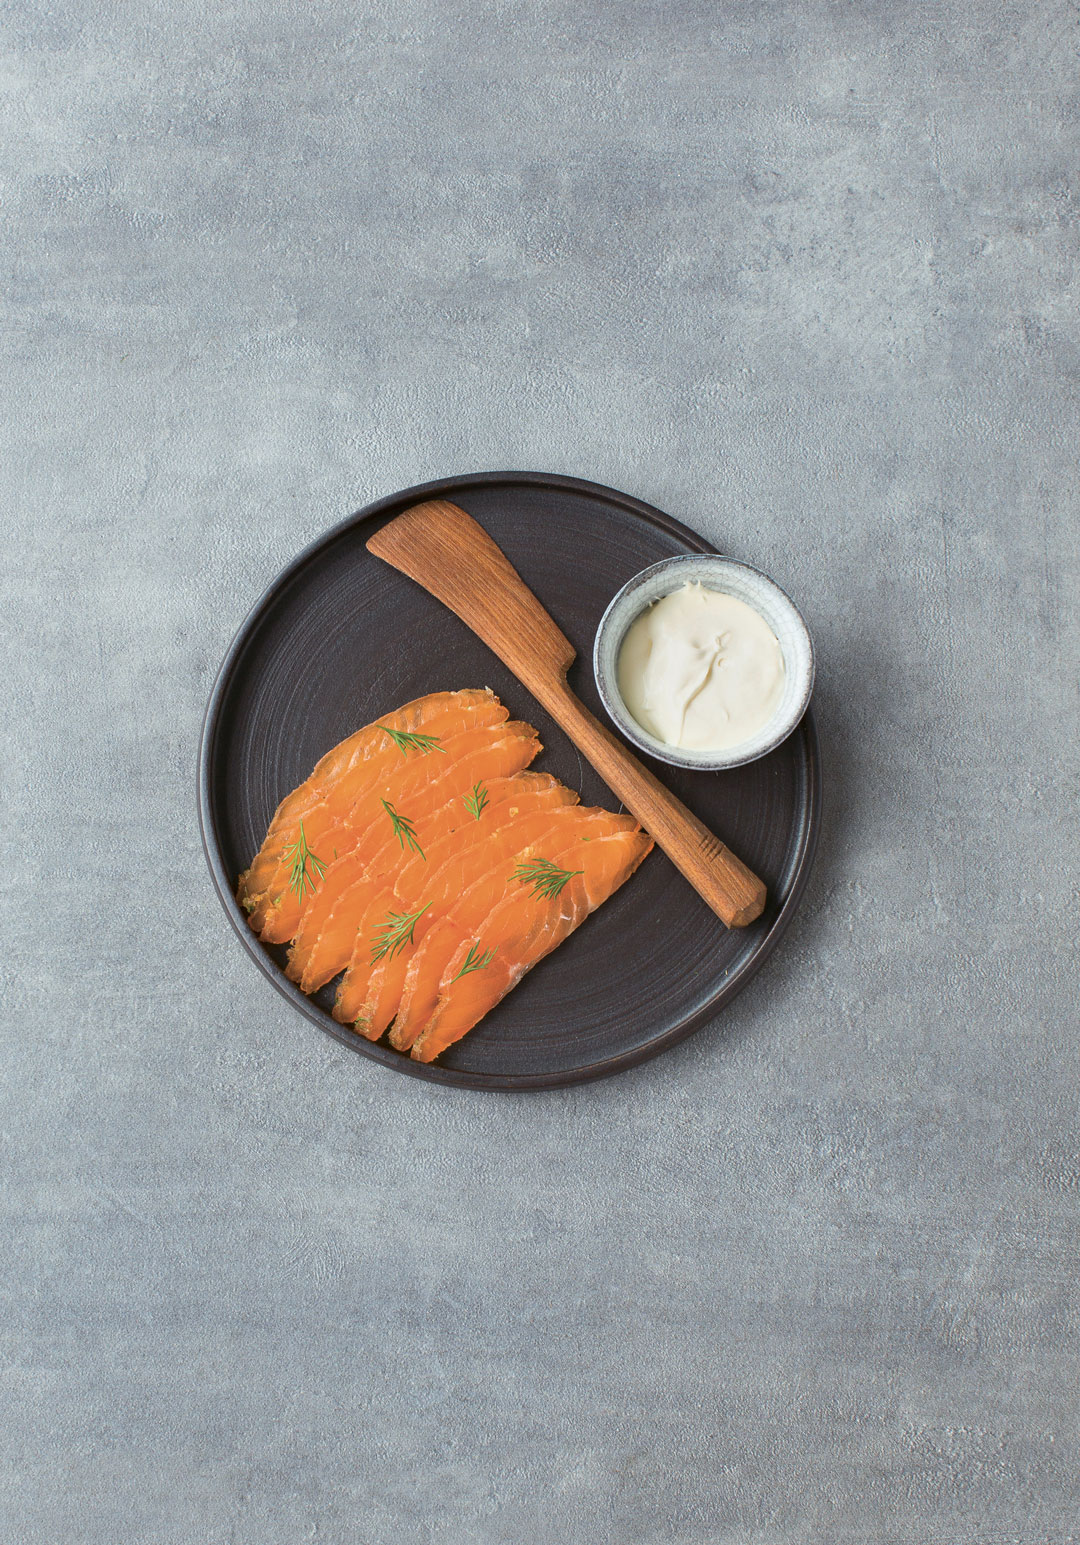 Dill-cured salmon with horseradish cream